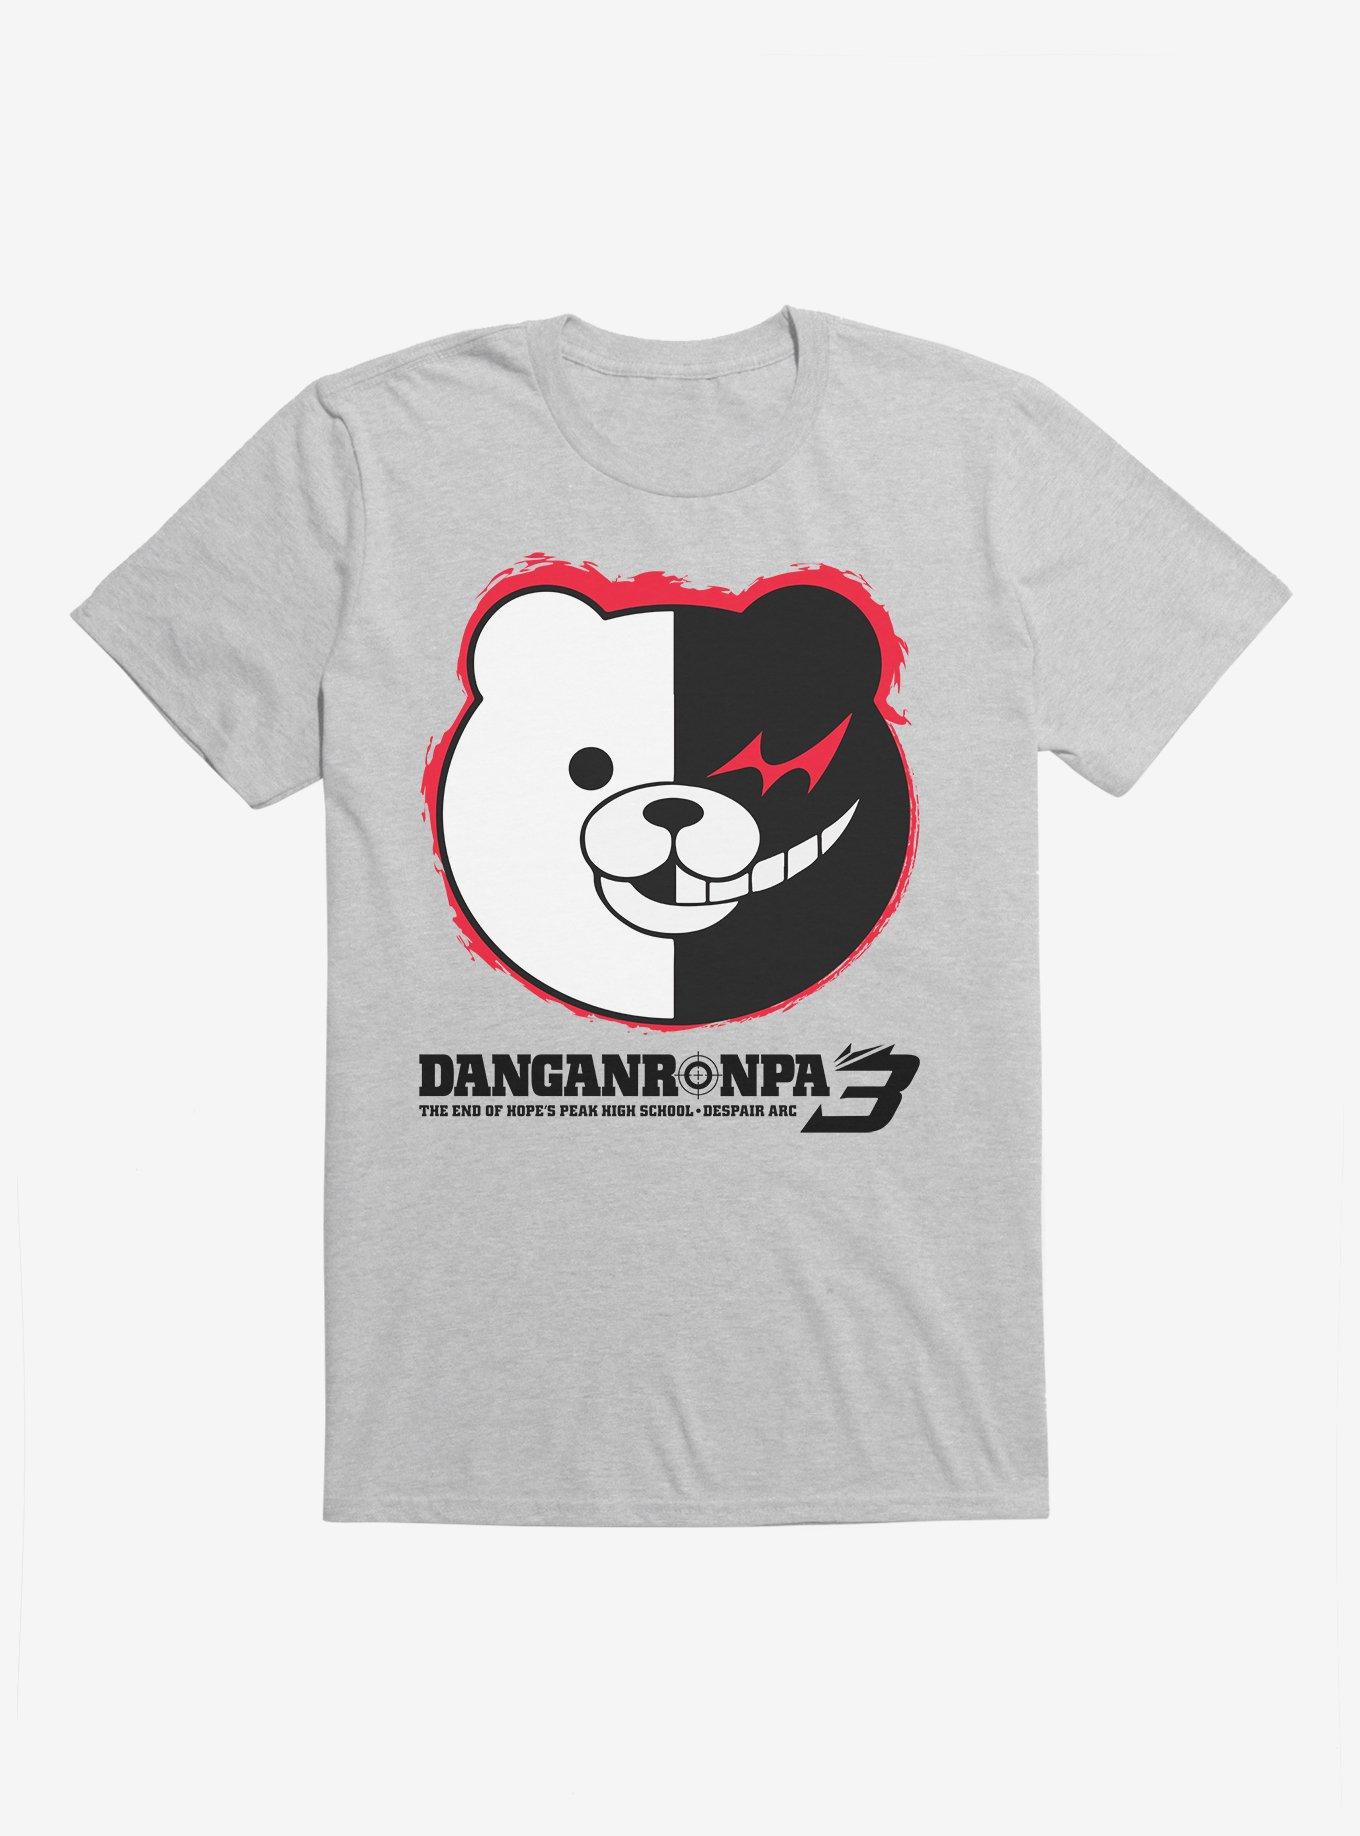  Danganronpa Monokuma Face Anime Tee Shirt Tshirt Unisex Men  Women Girls Boys Black S : Clothing, Shoes & Jewelry